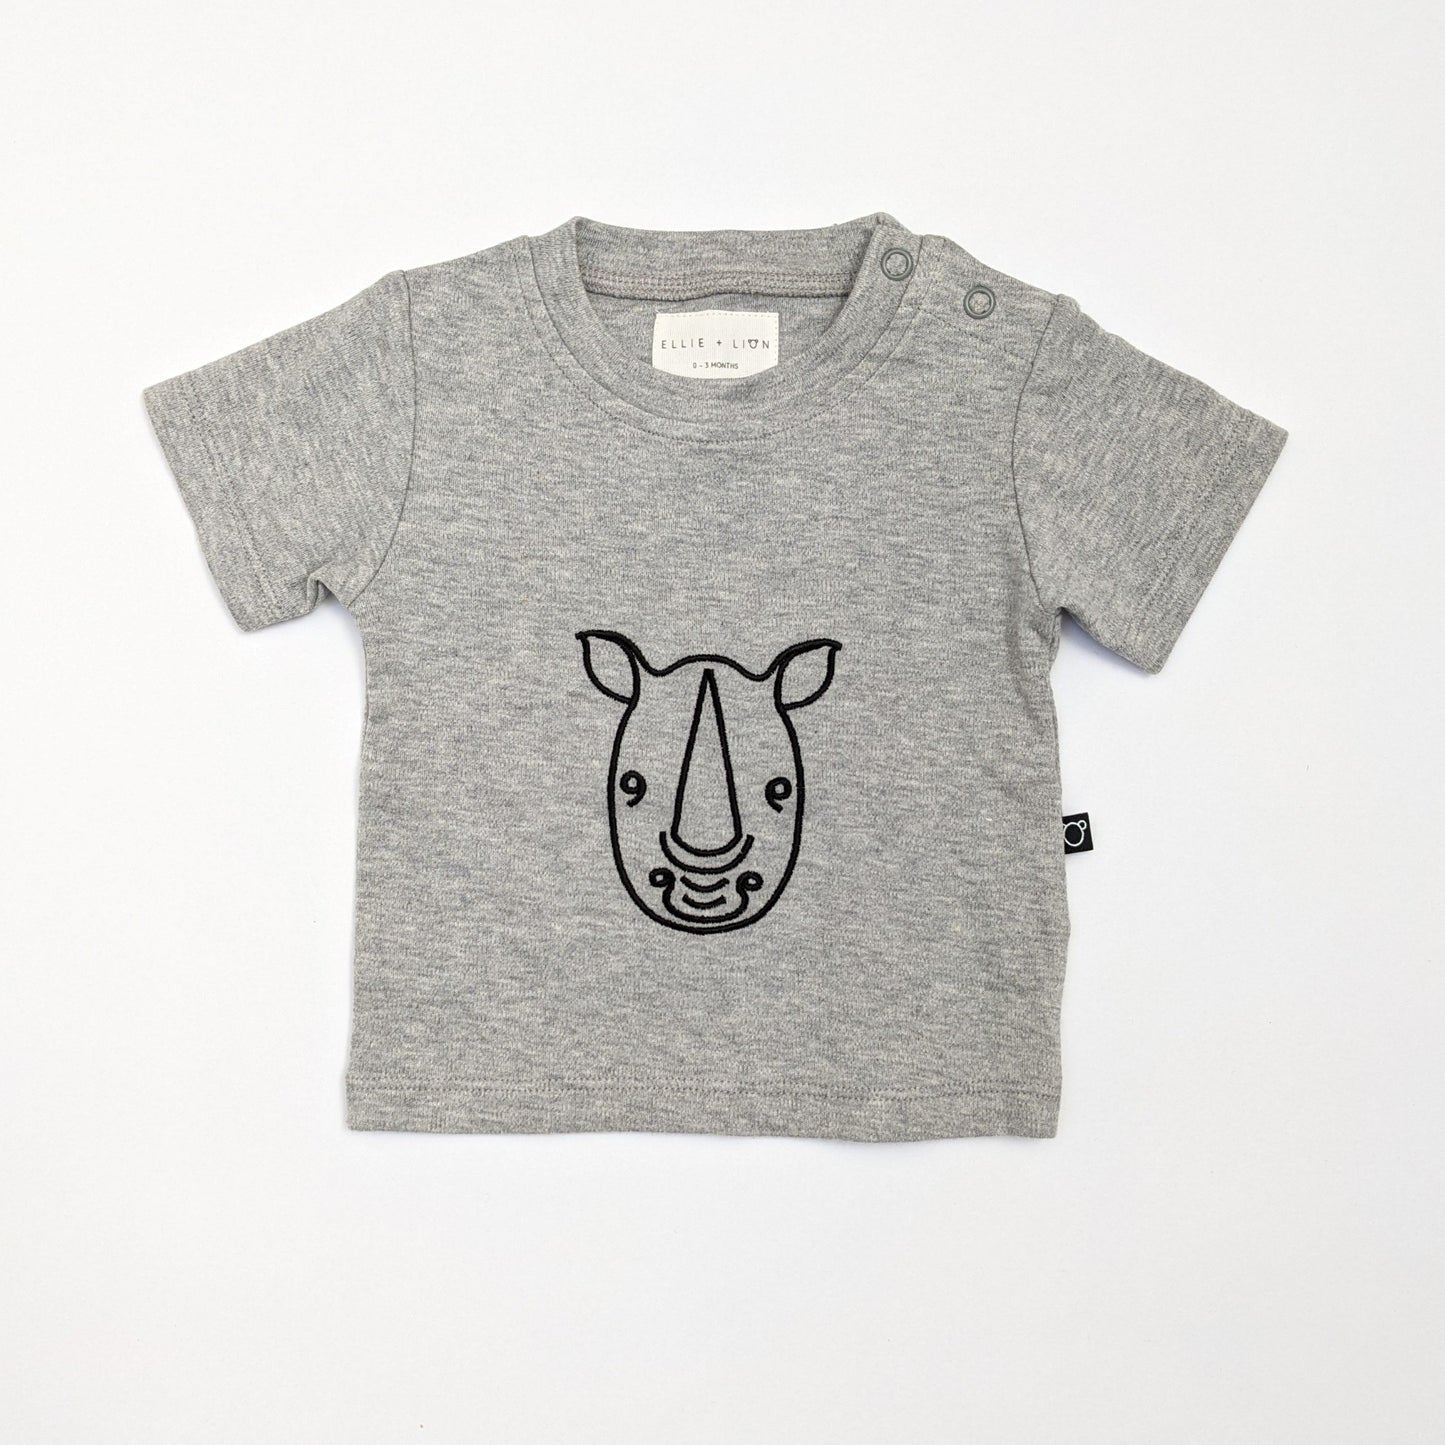 Rhino grey t-shirt